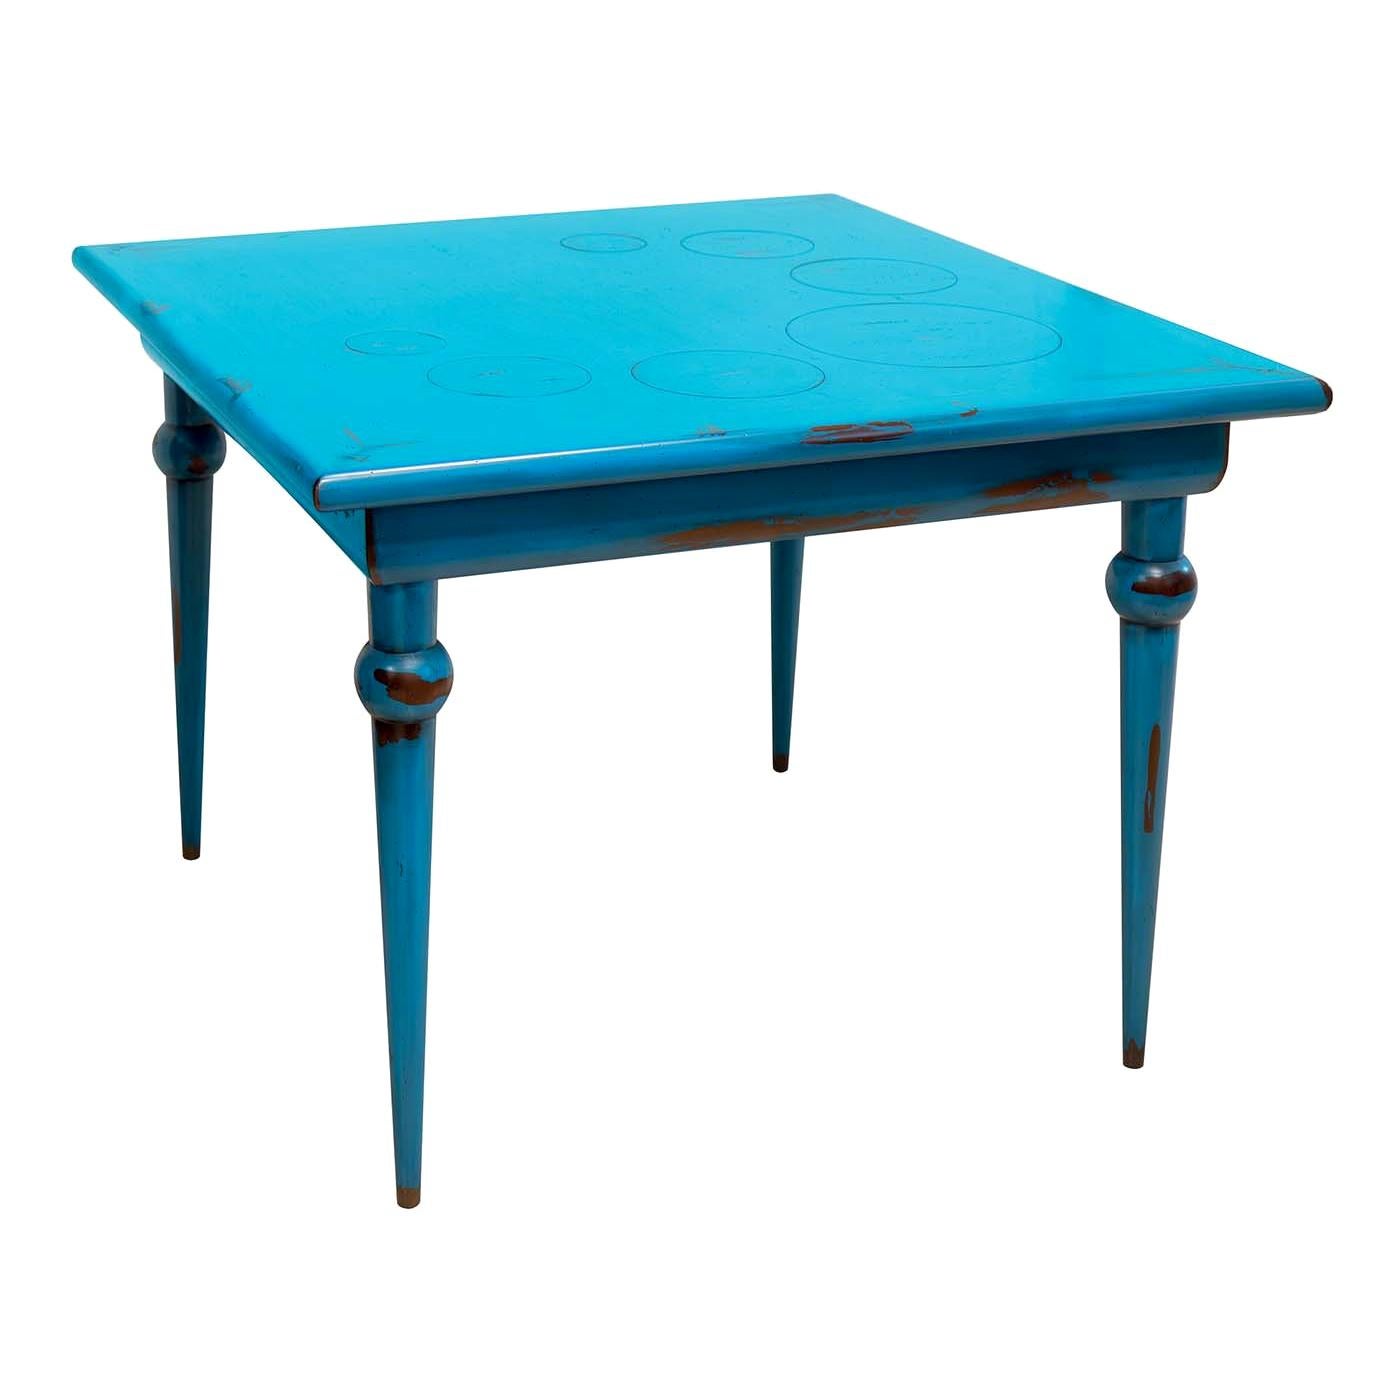 Le Bolle Blue Square Table